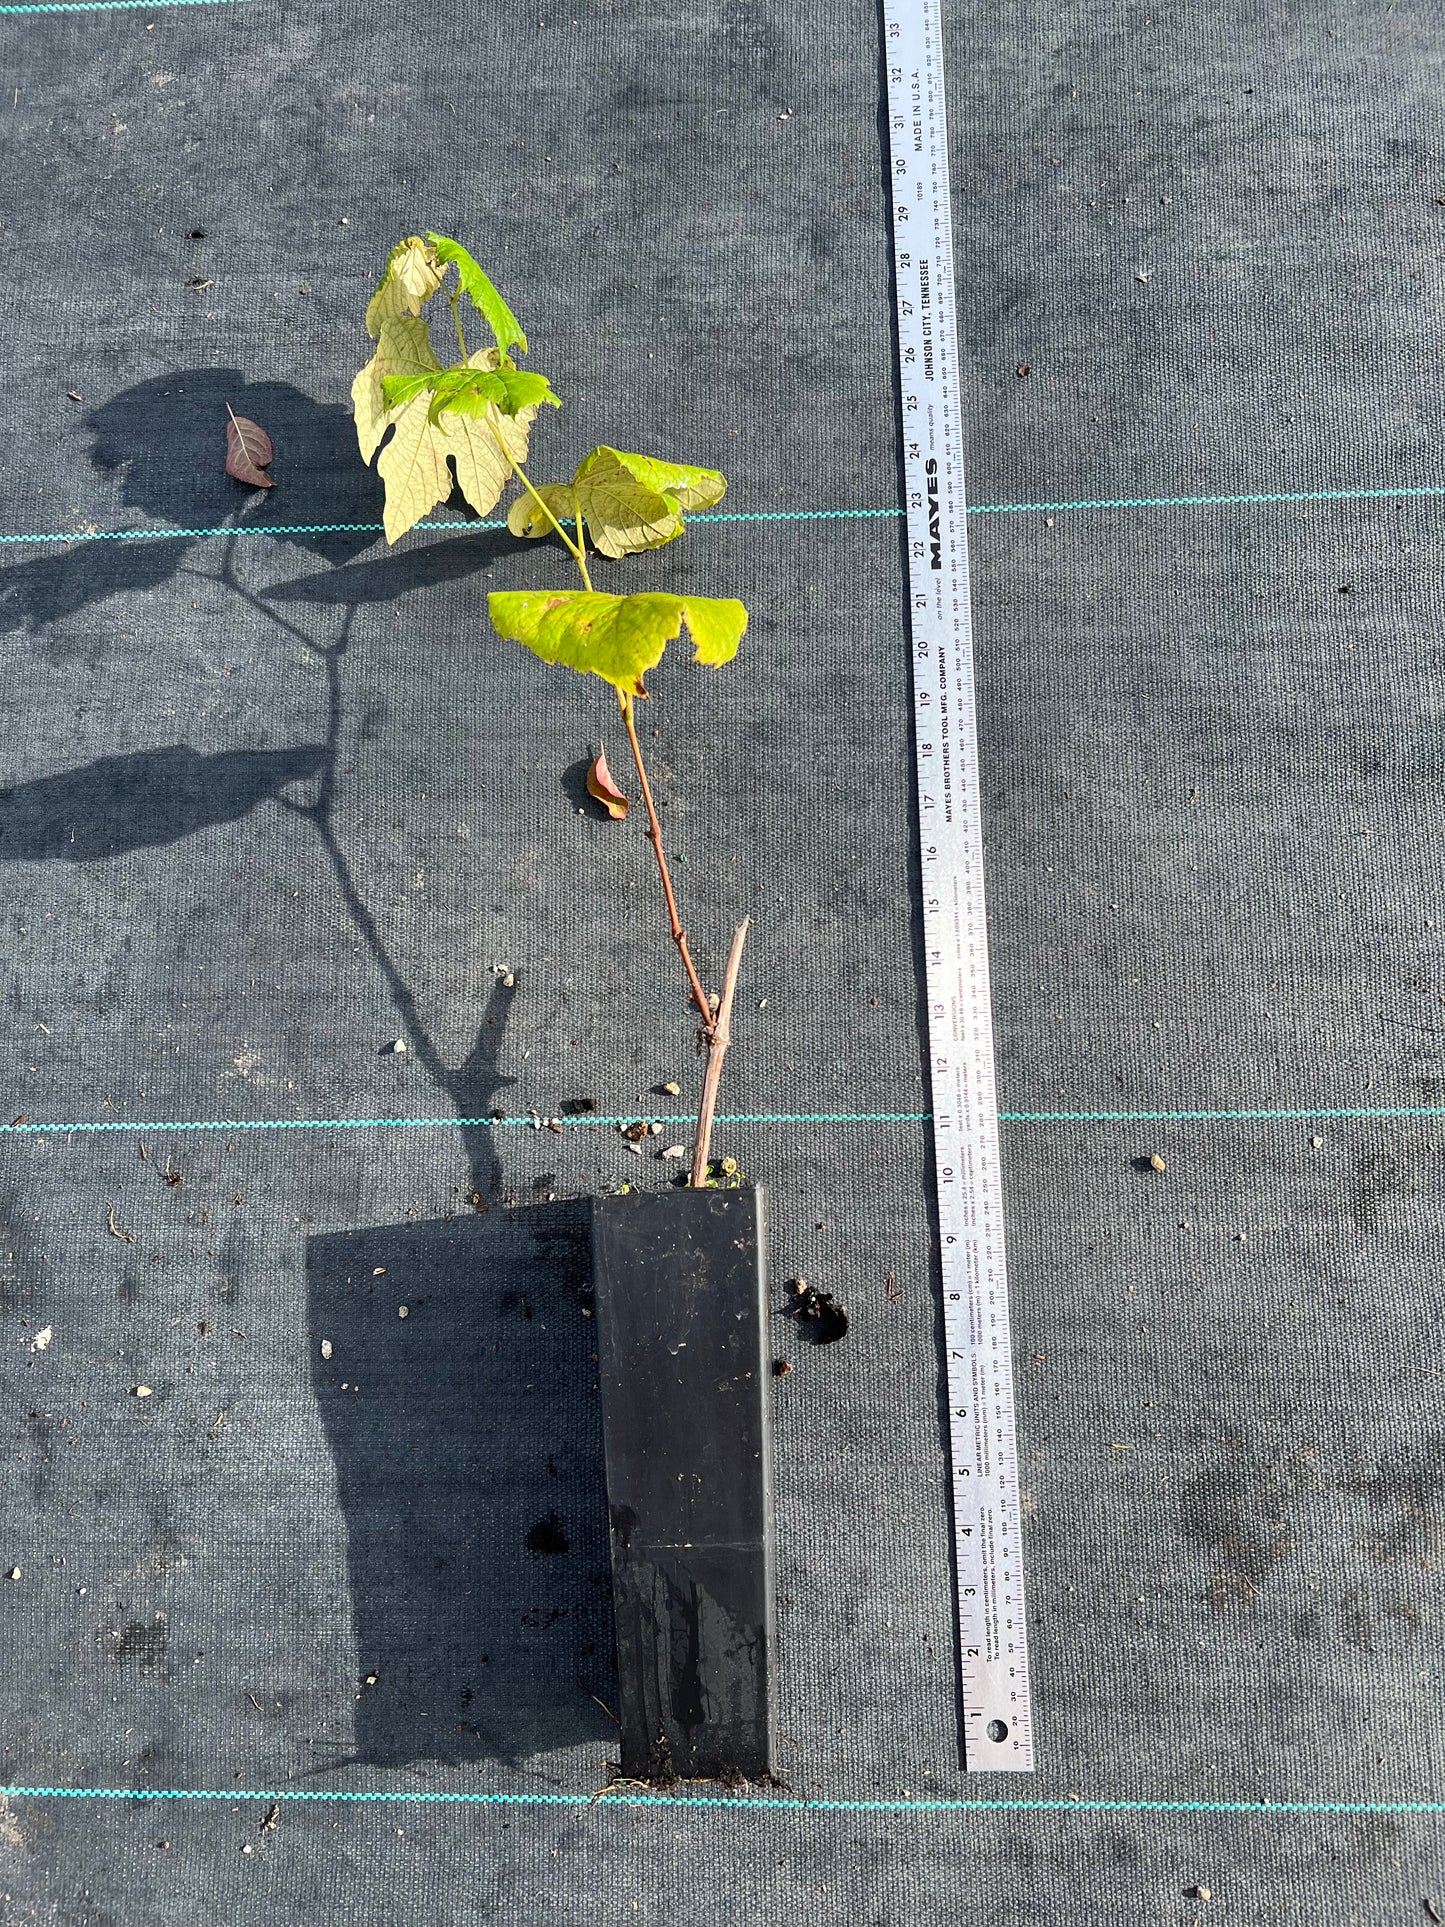 Japanese Kyoho grape plant 巨峰葡萄苗 교호포도 US seller